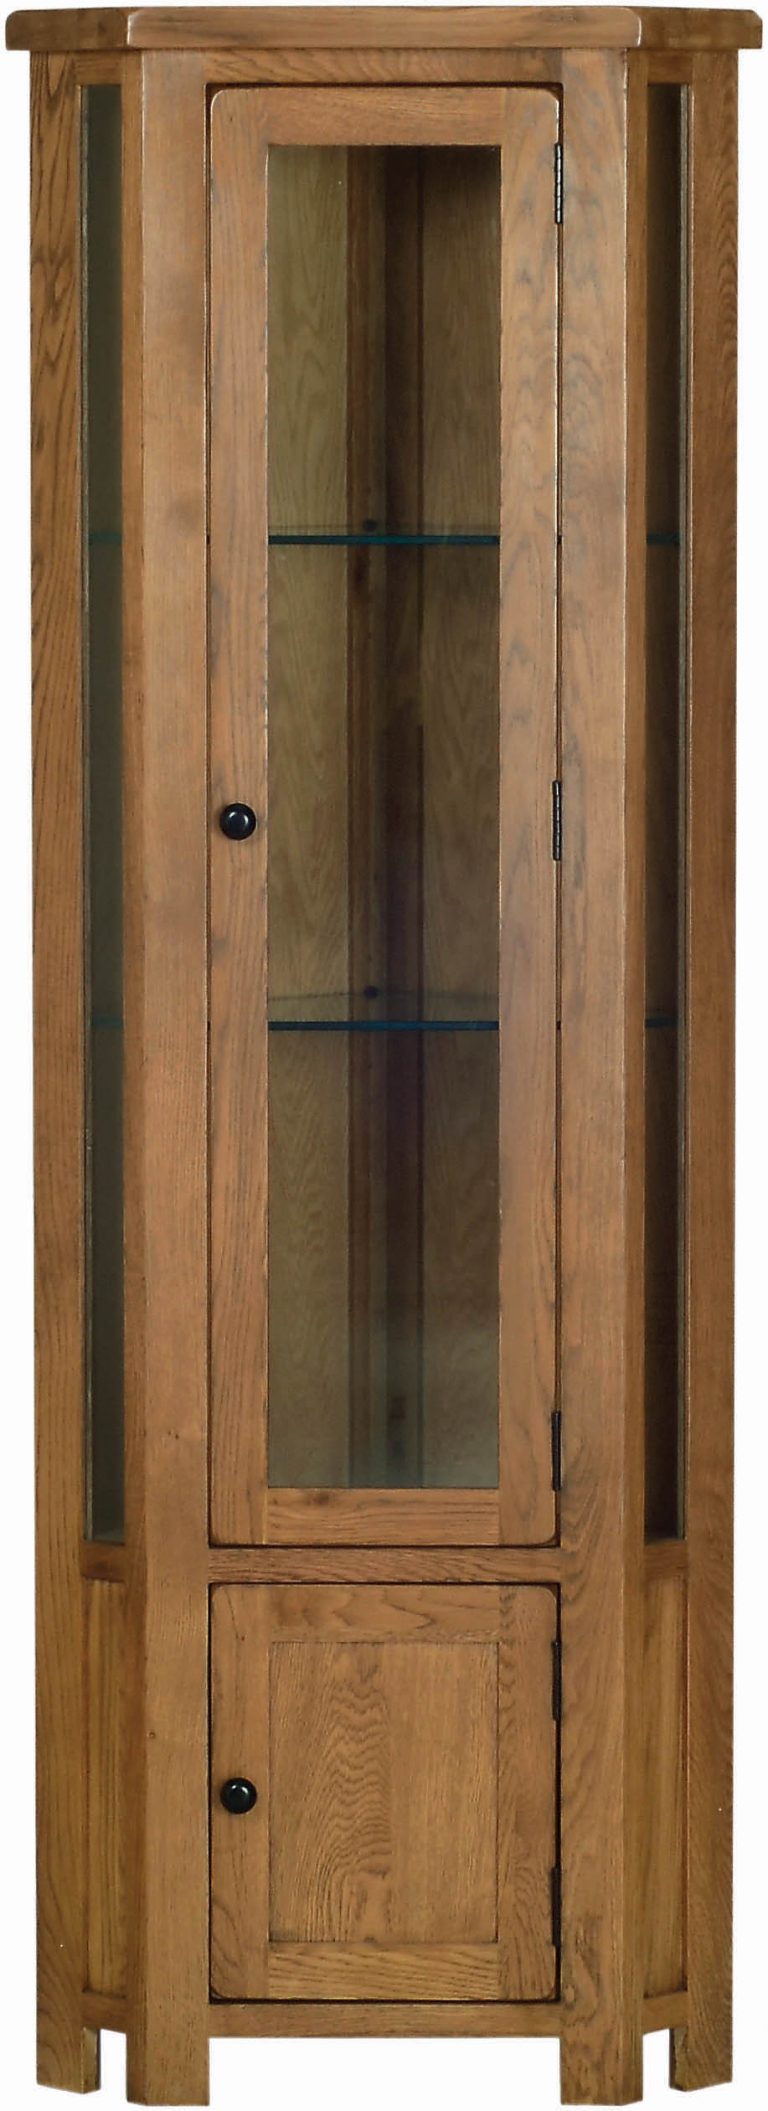 Devonshire Rustic Oak Corner Display Cabinet with Cupboard & Light | Fully Assembled